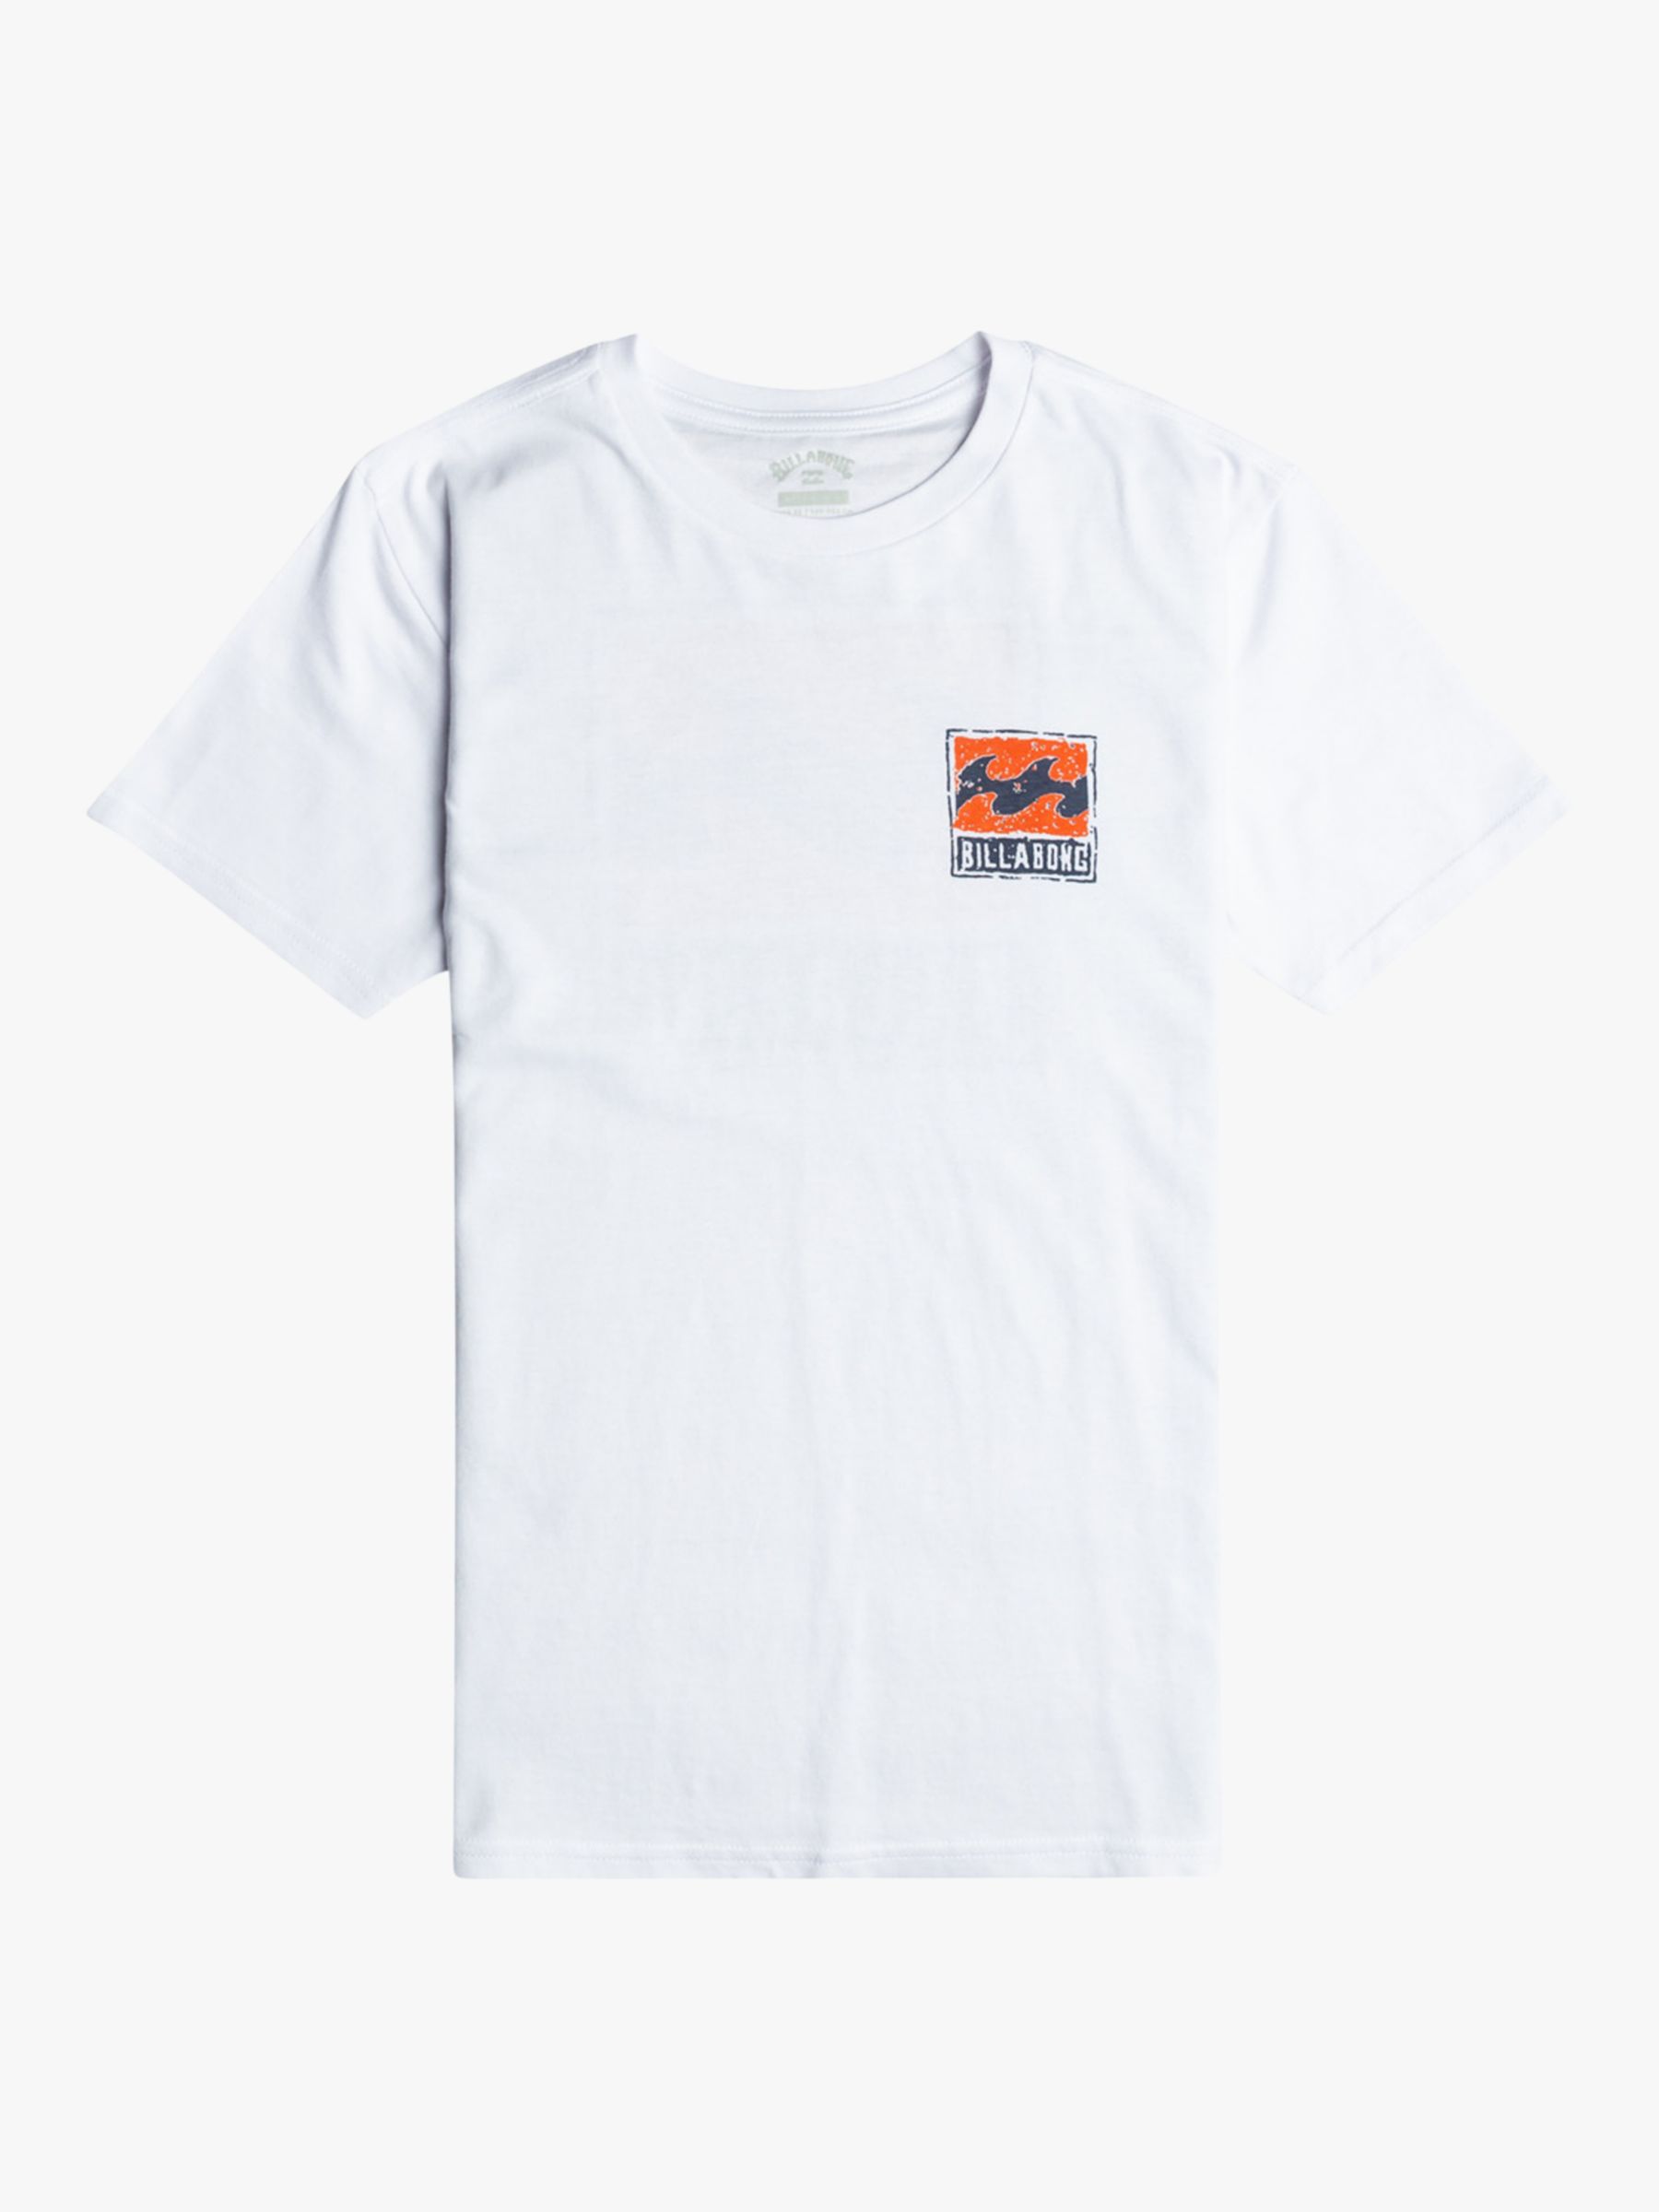 Billabong Kids' Stamp Short Sleeve T-Shirt, White, 16 years